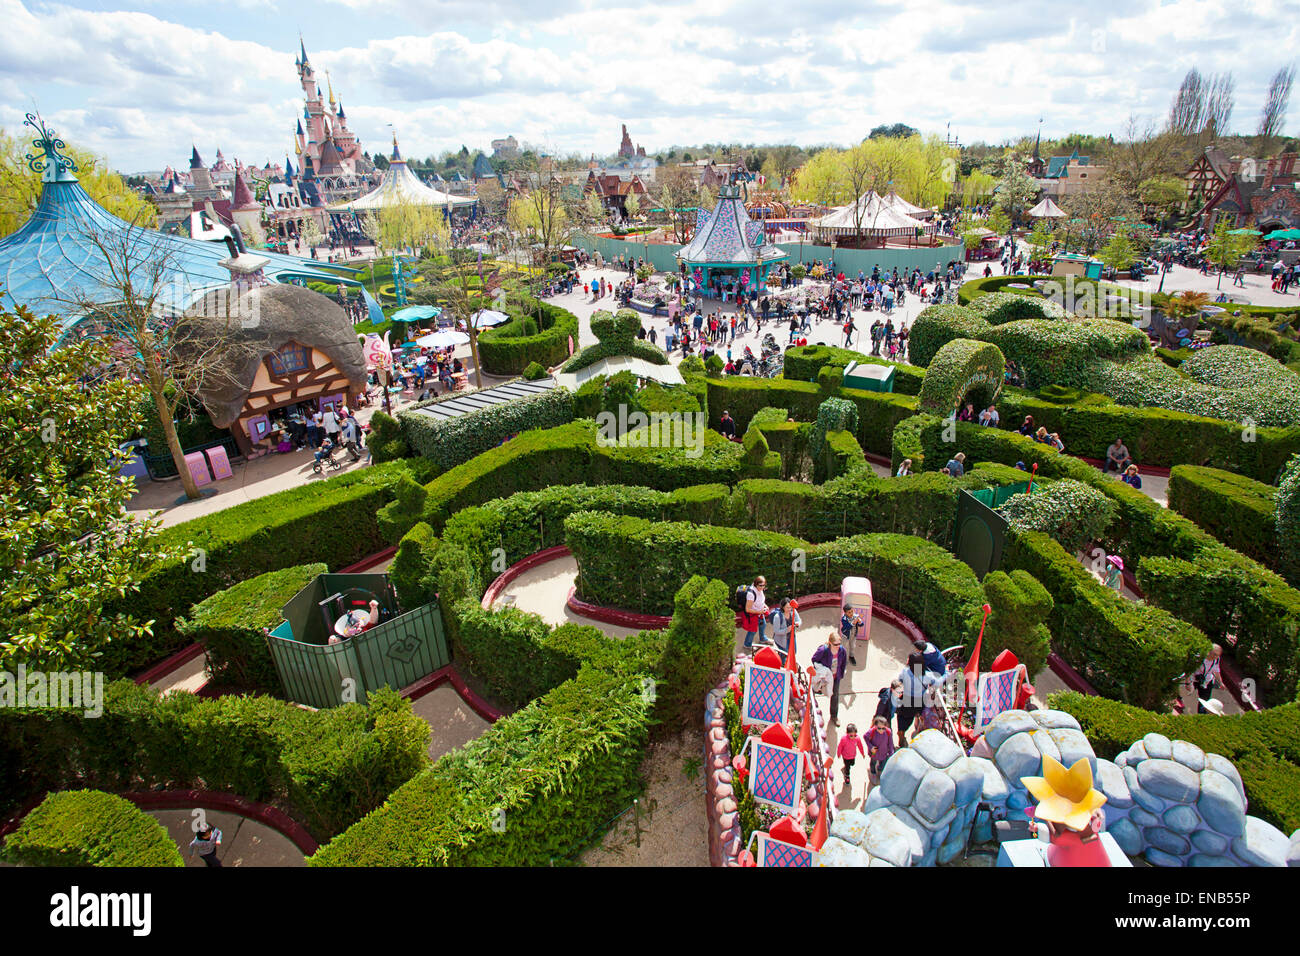 Disneyland Paris Aerial Fotos Und Bildmaterial In Hoher Auflösung Alamy 